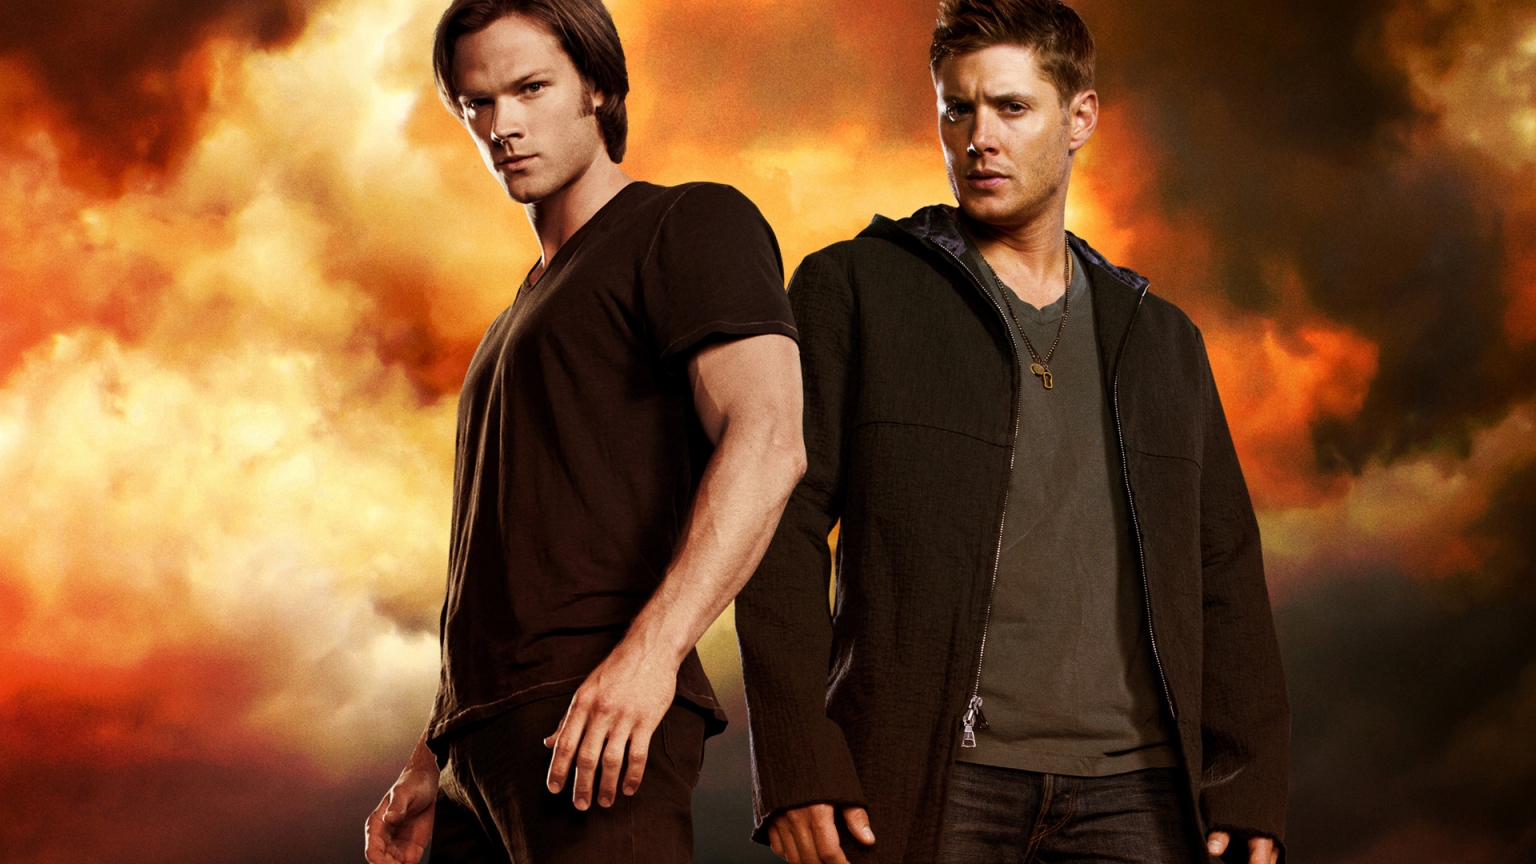 Supernatural Dean & Sam for 1536 x 864 HDTV resolution